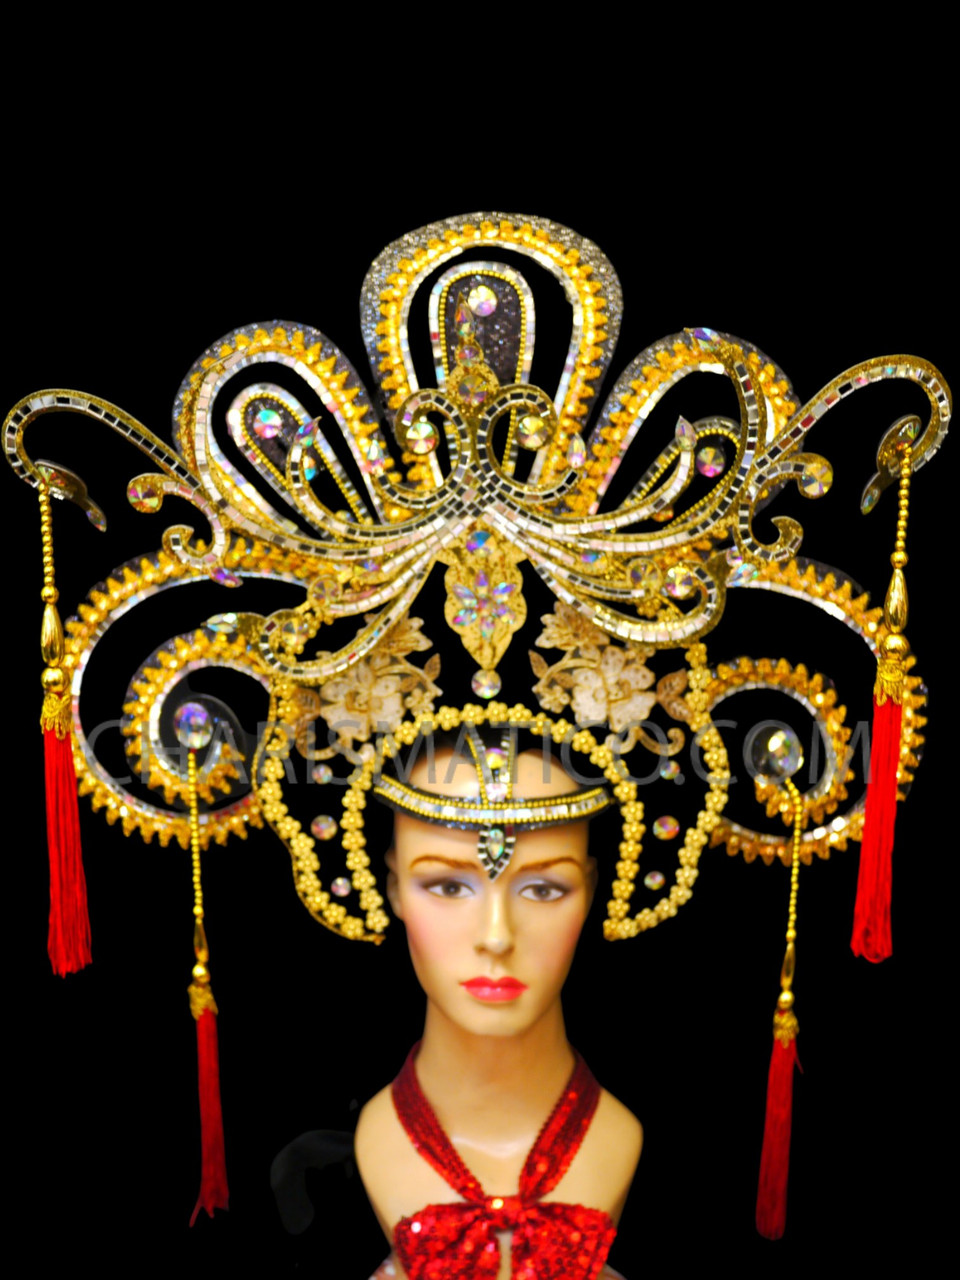 Regal Empress Mini Crown